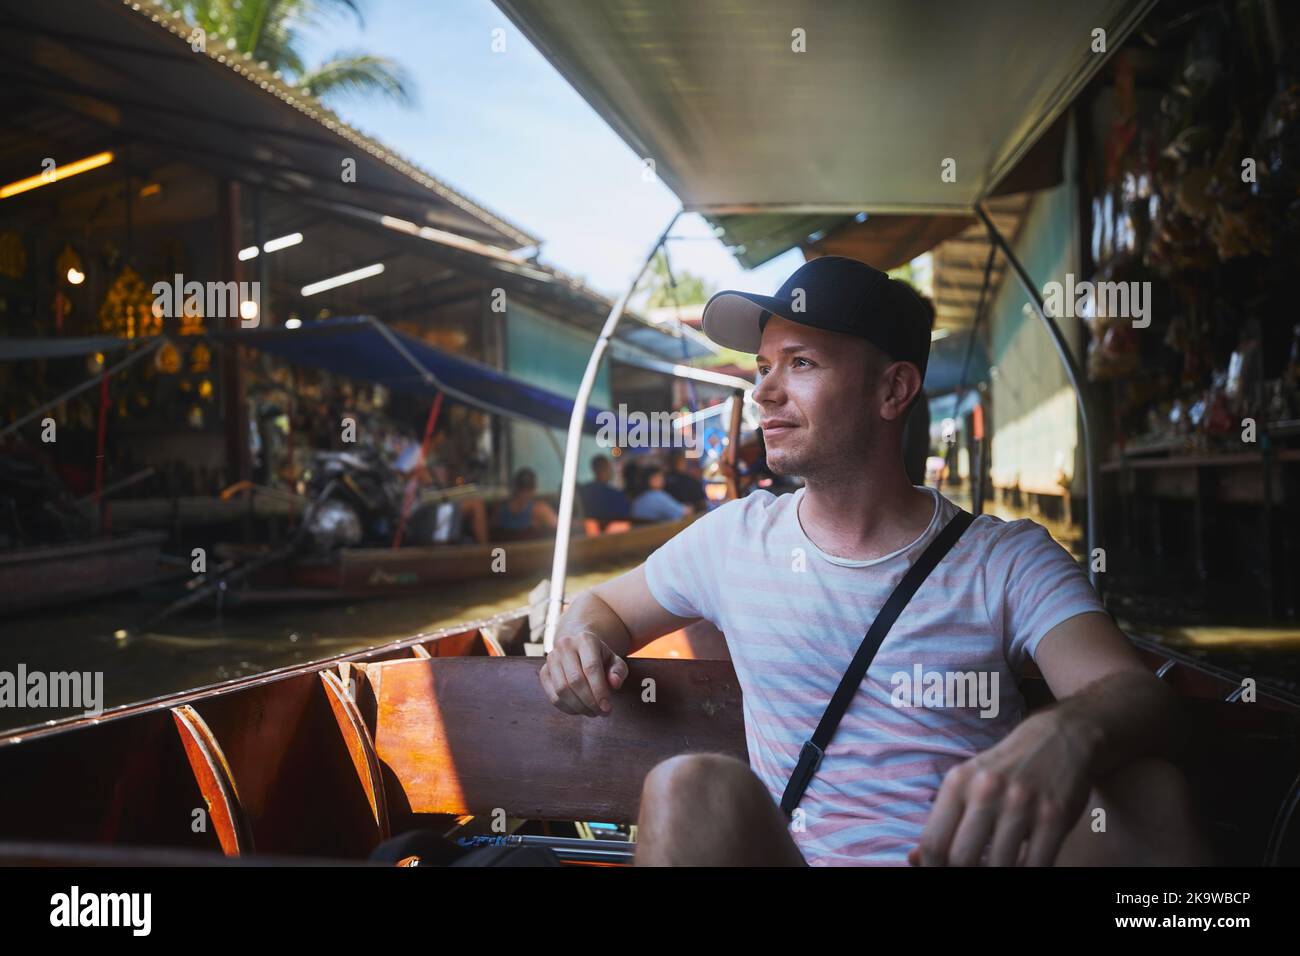 Tourist on boat. Man enjoys trip to floating market Damnoen Saduak in Ratchaburi near Bangkok, Thailand. Stock Photo